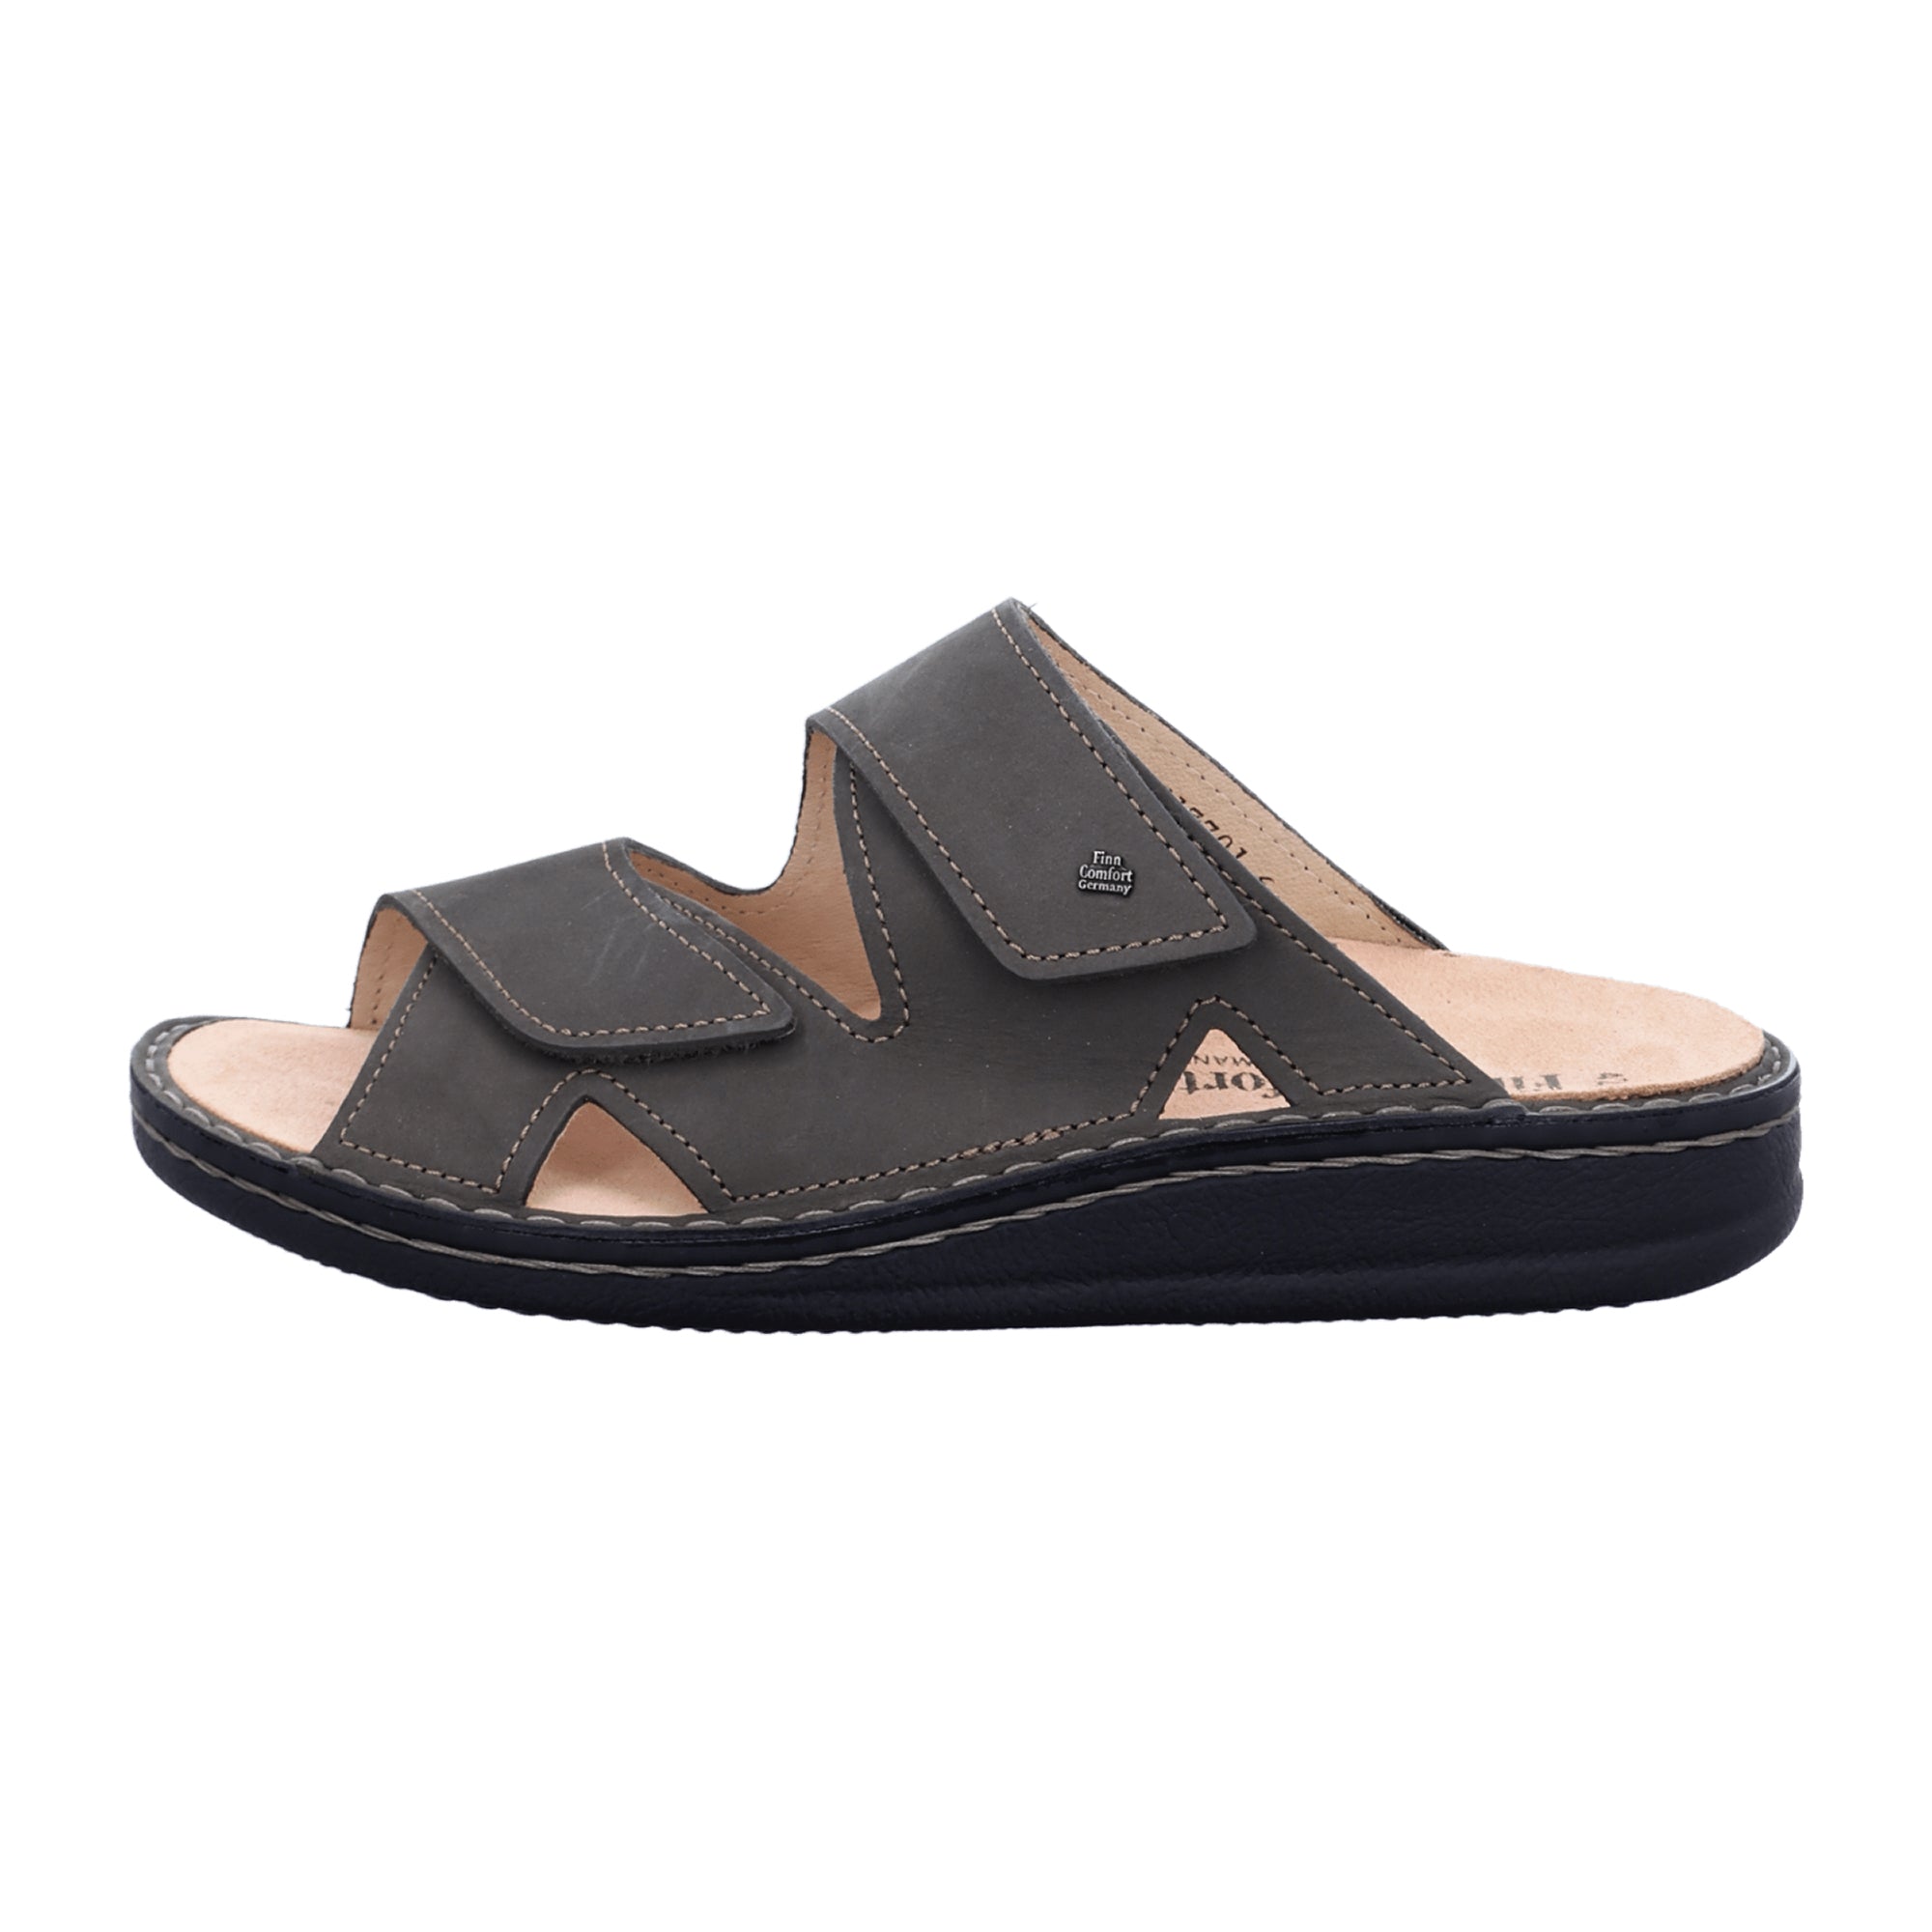 Finn Comfort Danzig-Soft Men's Sandal - Comfort Slide in Mud Brown (Nubuck Leather)